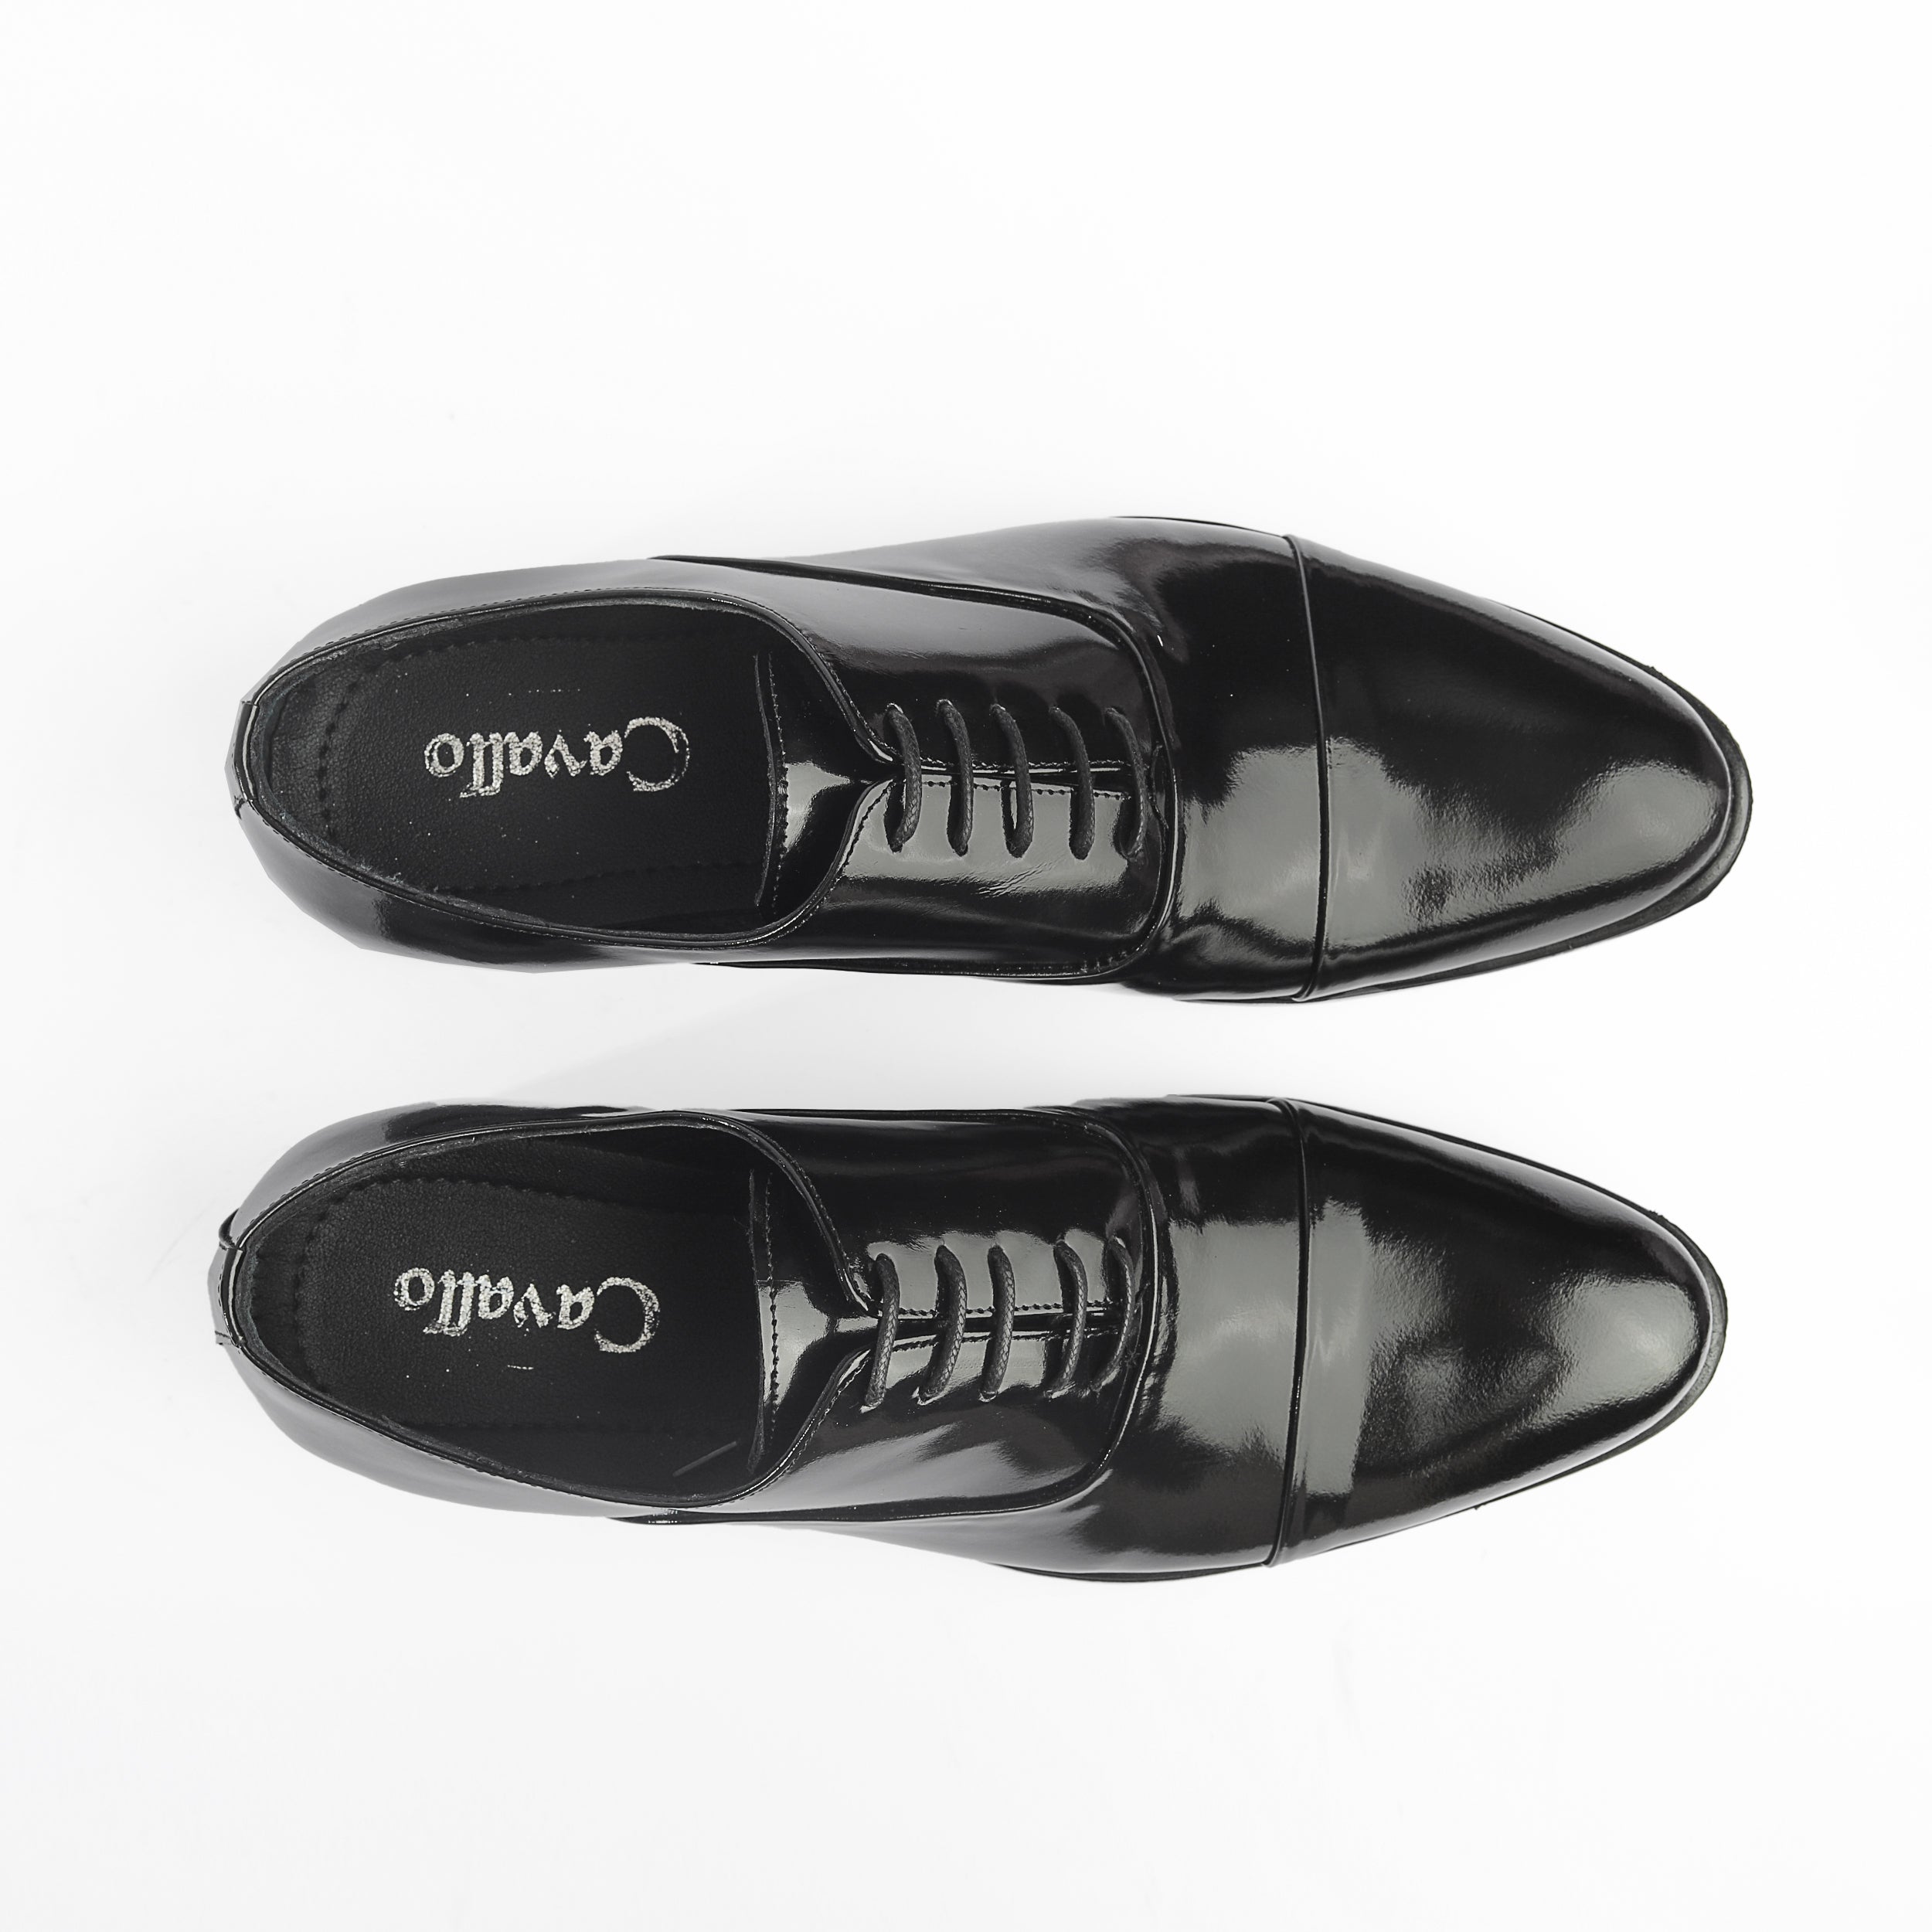 Cavallo Classic Shoes A88